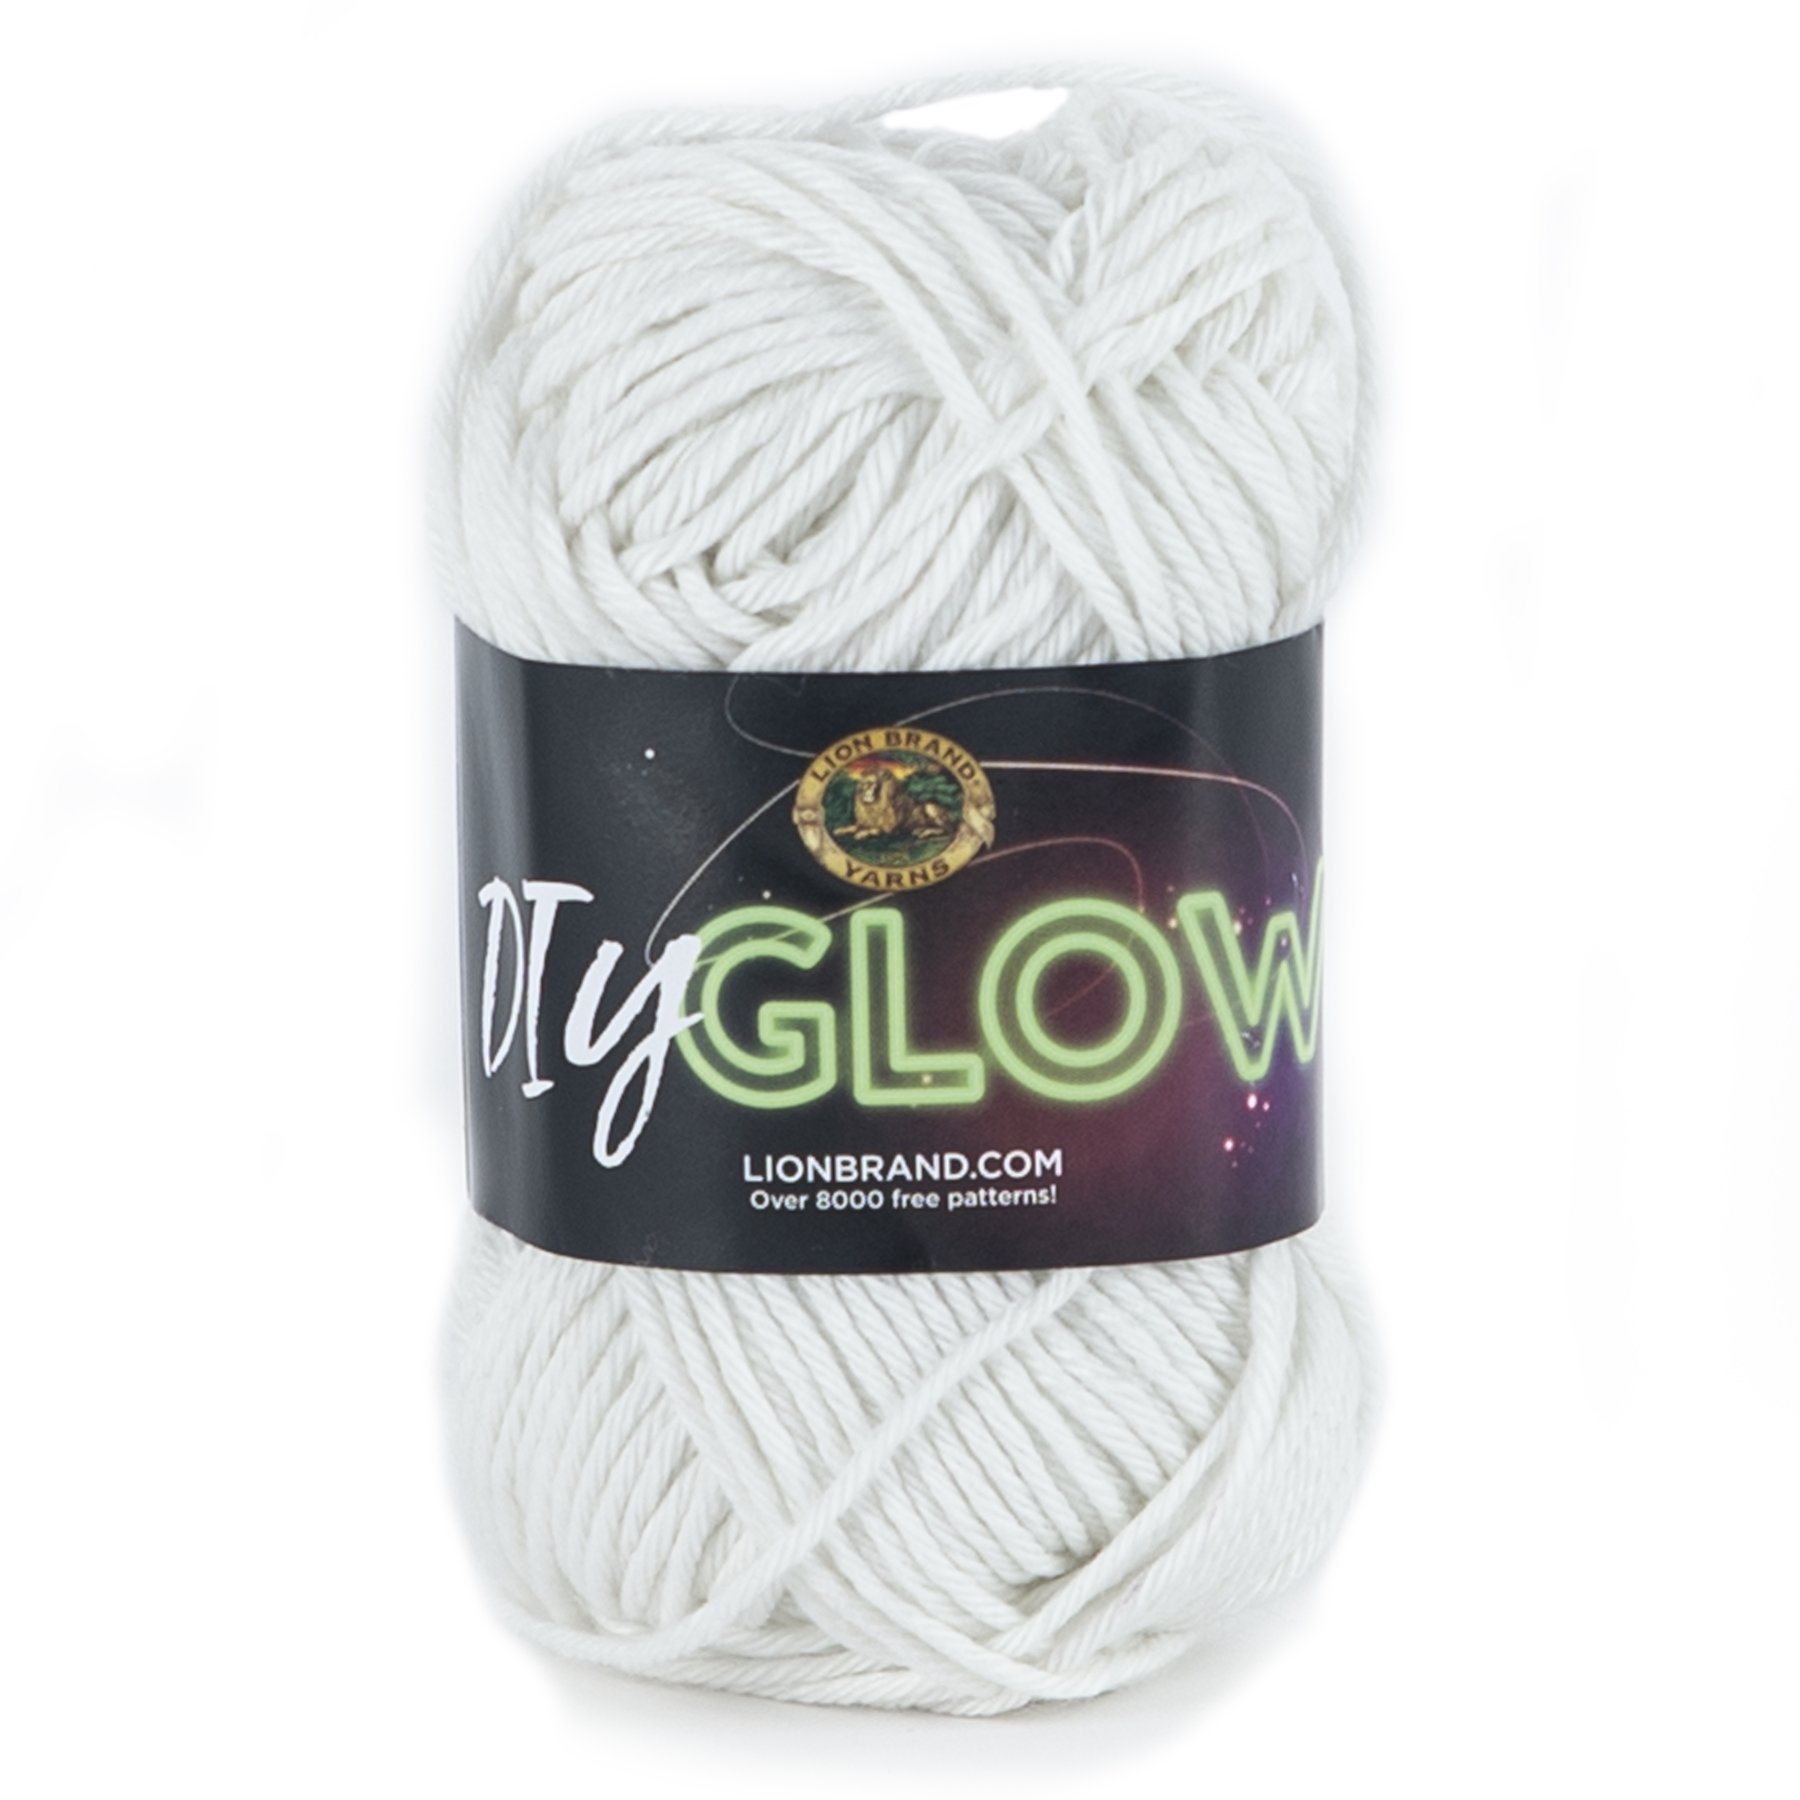 DIY Glow Yarn